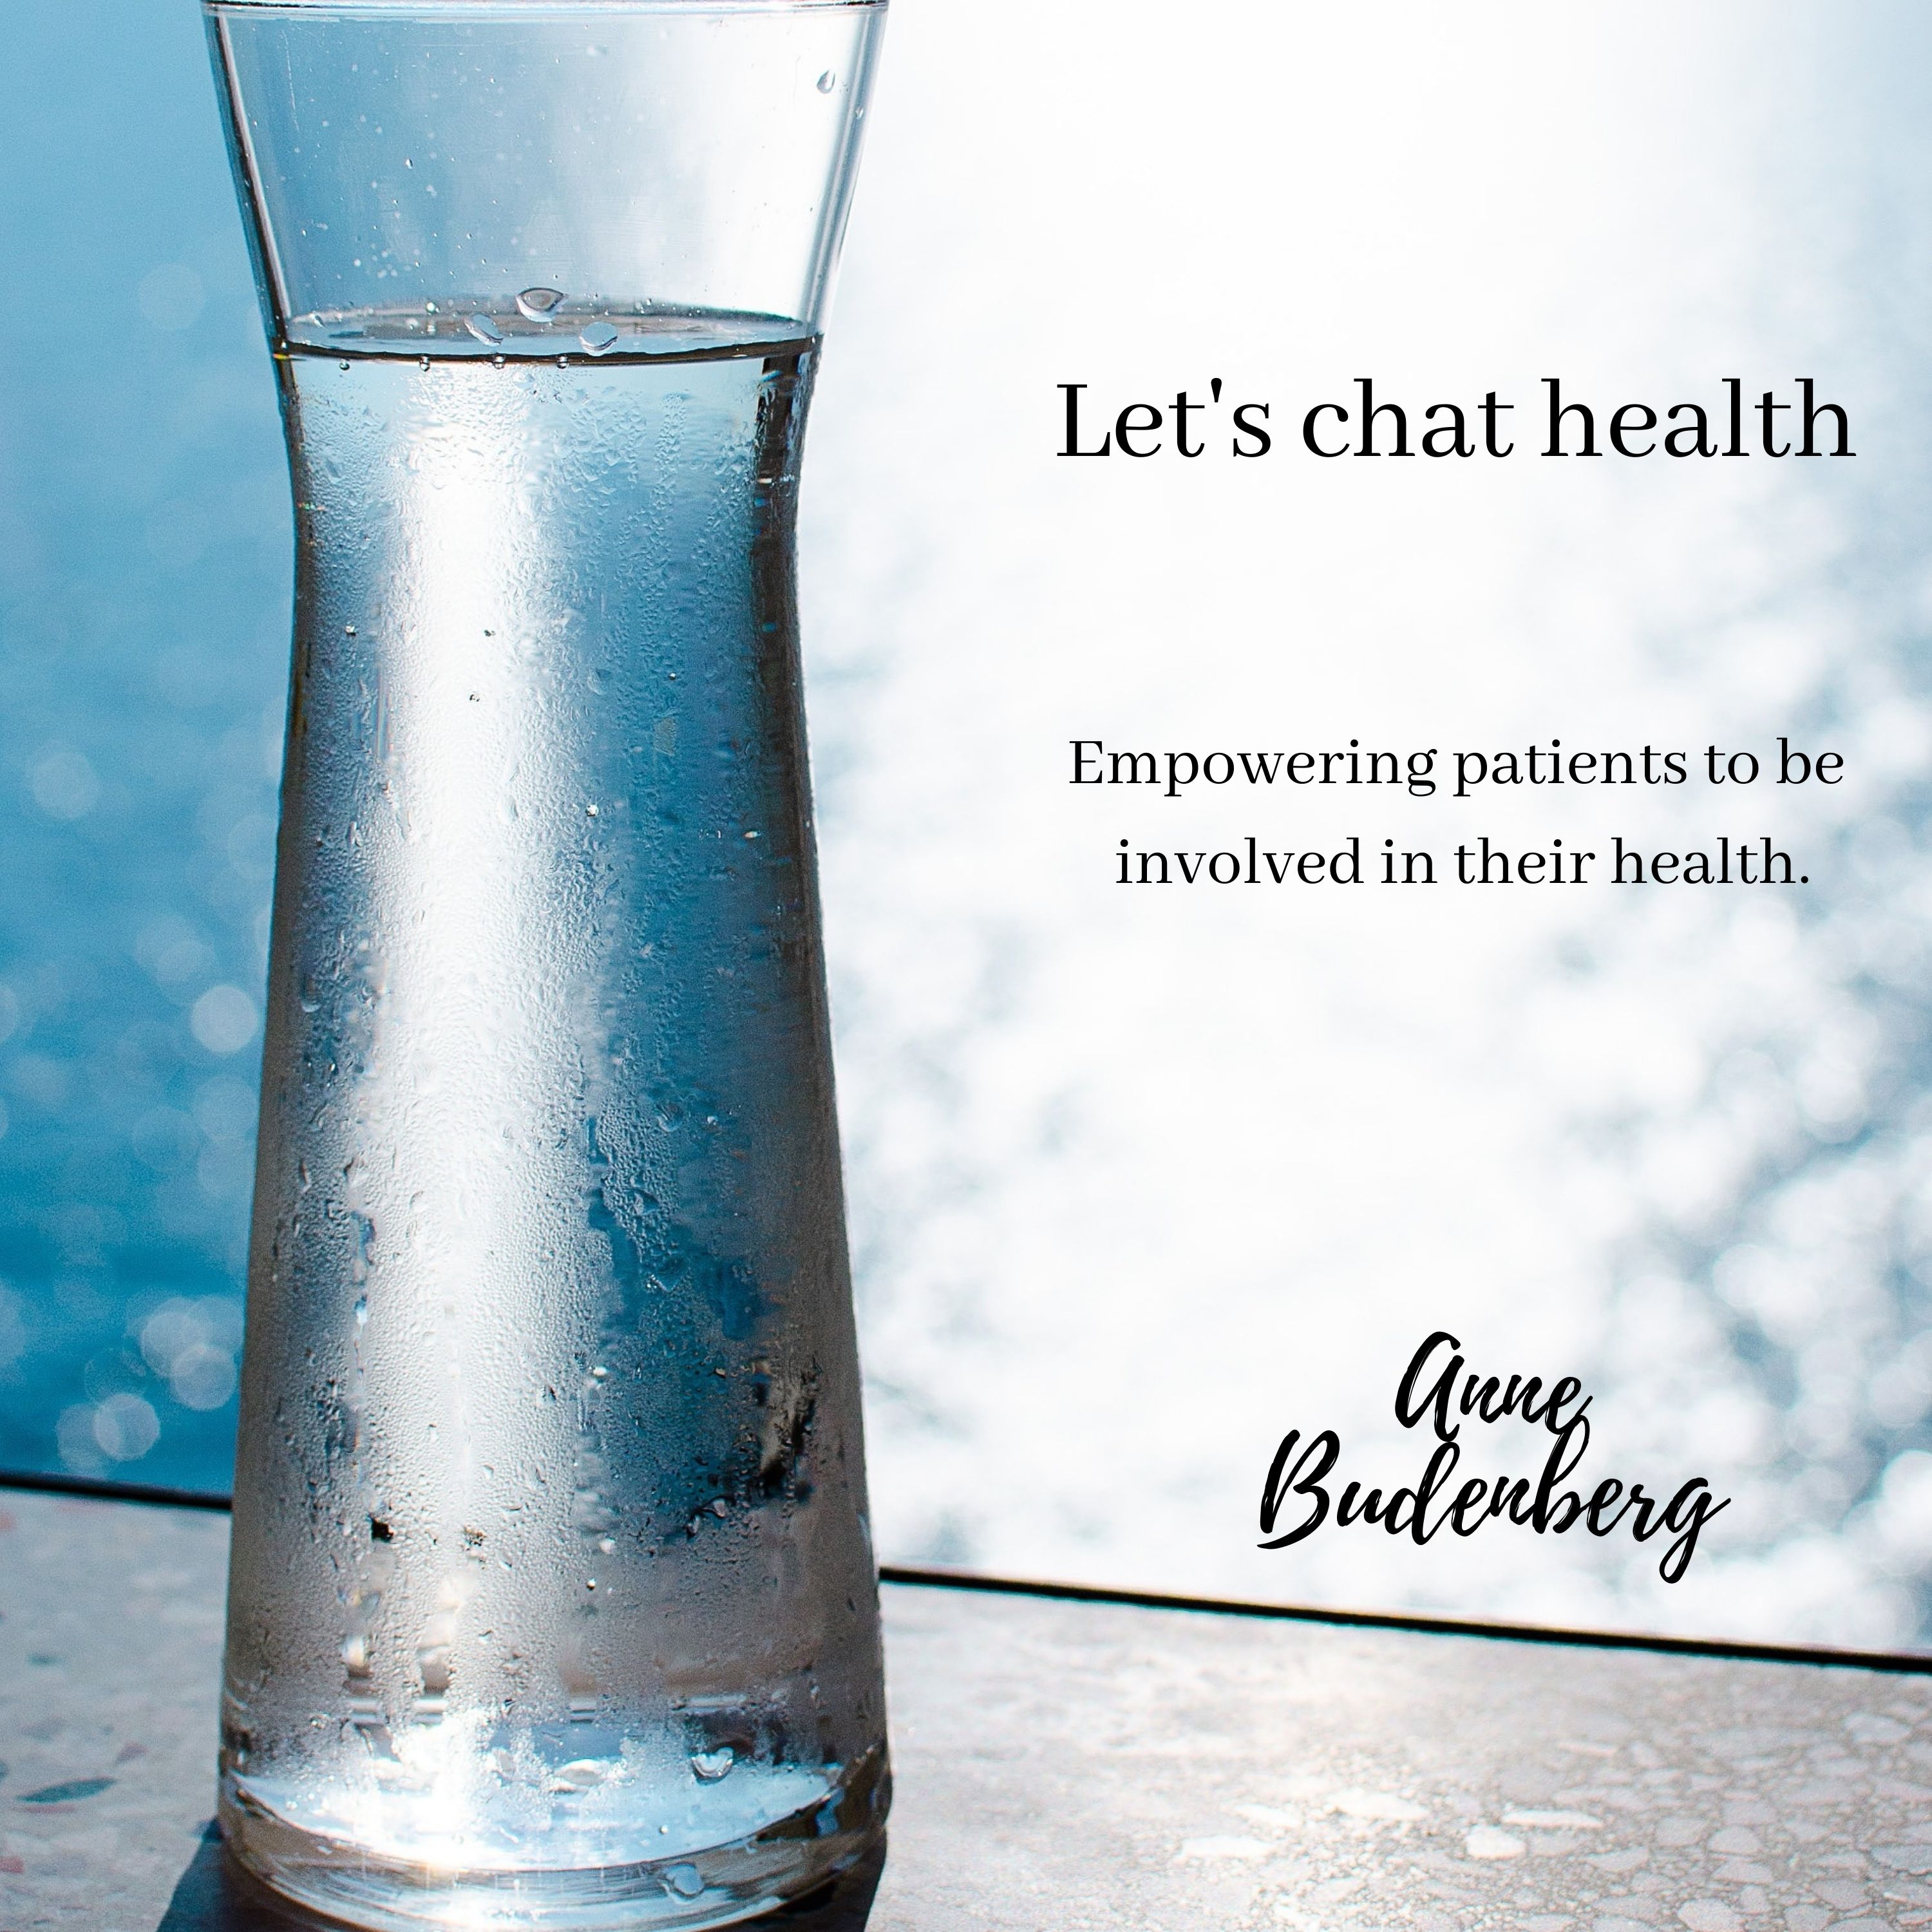 Artwork for Let's chat health